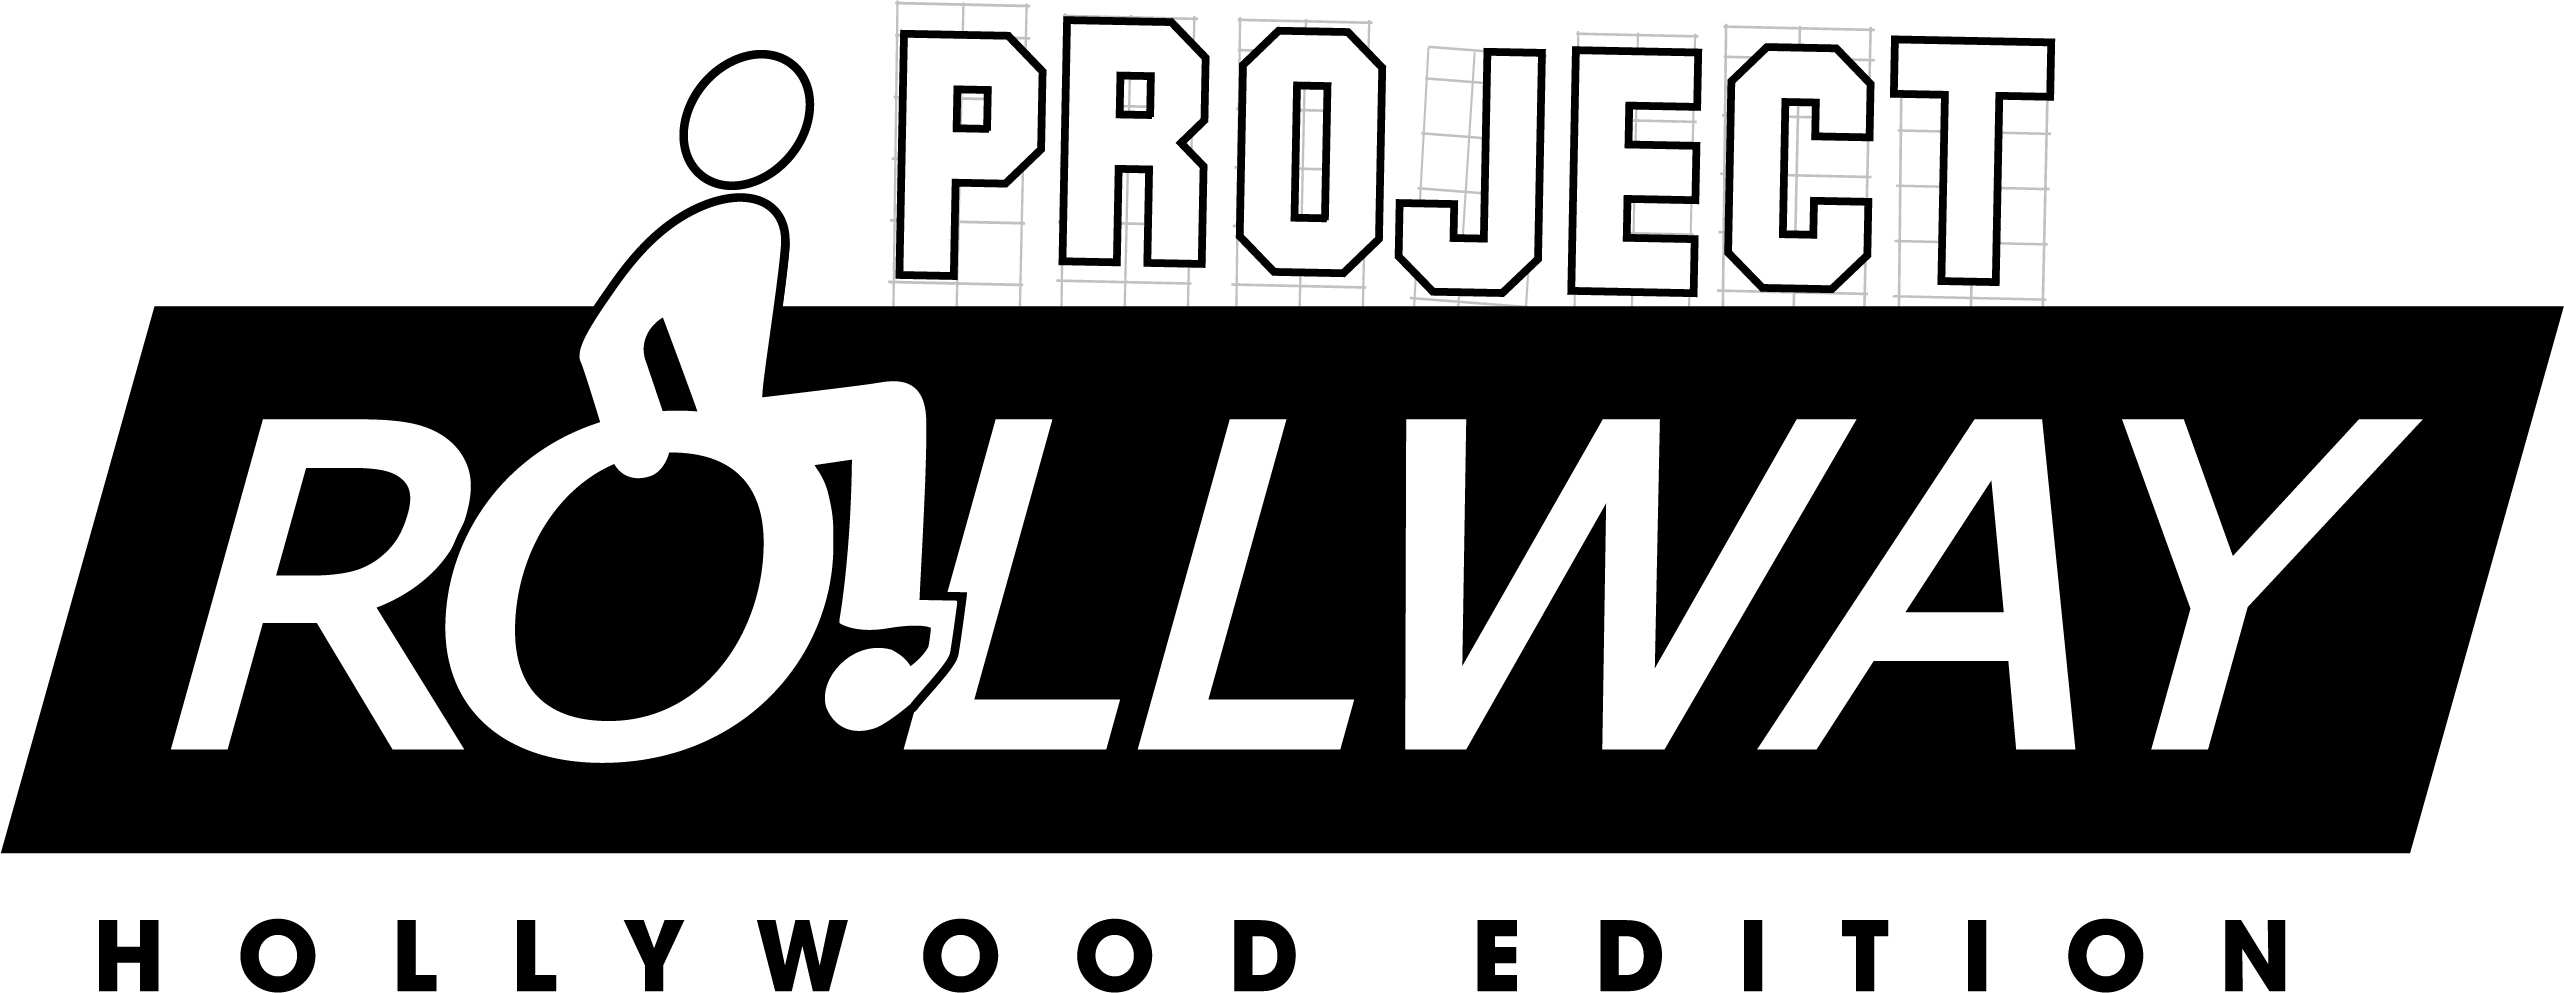 Project Rollway 2022 logo